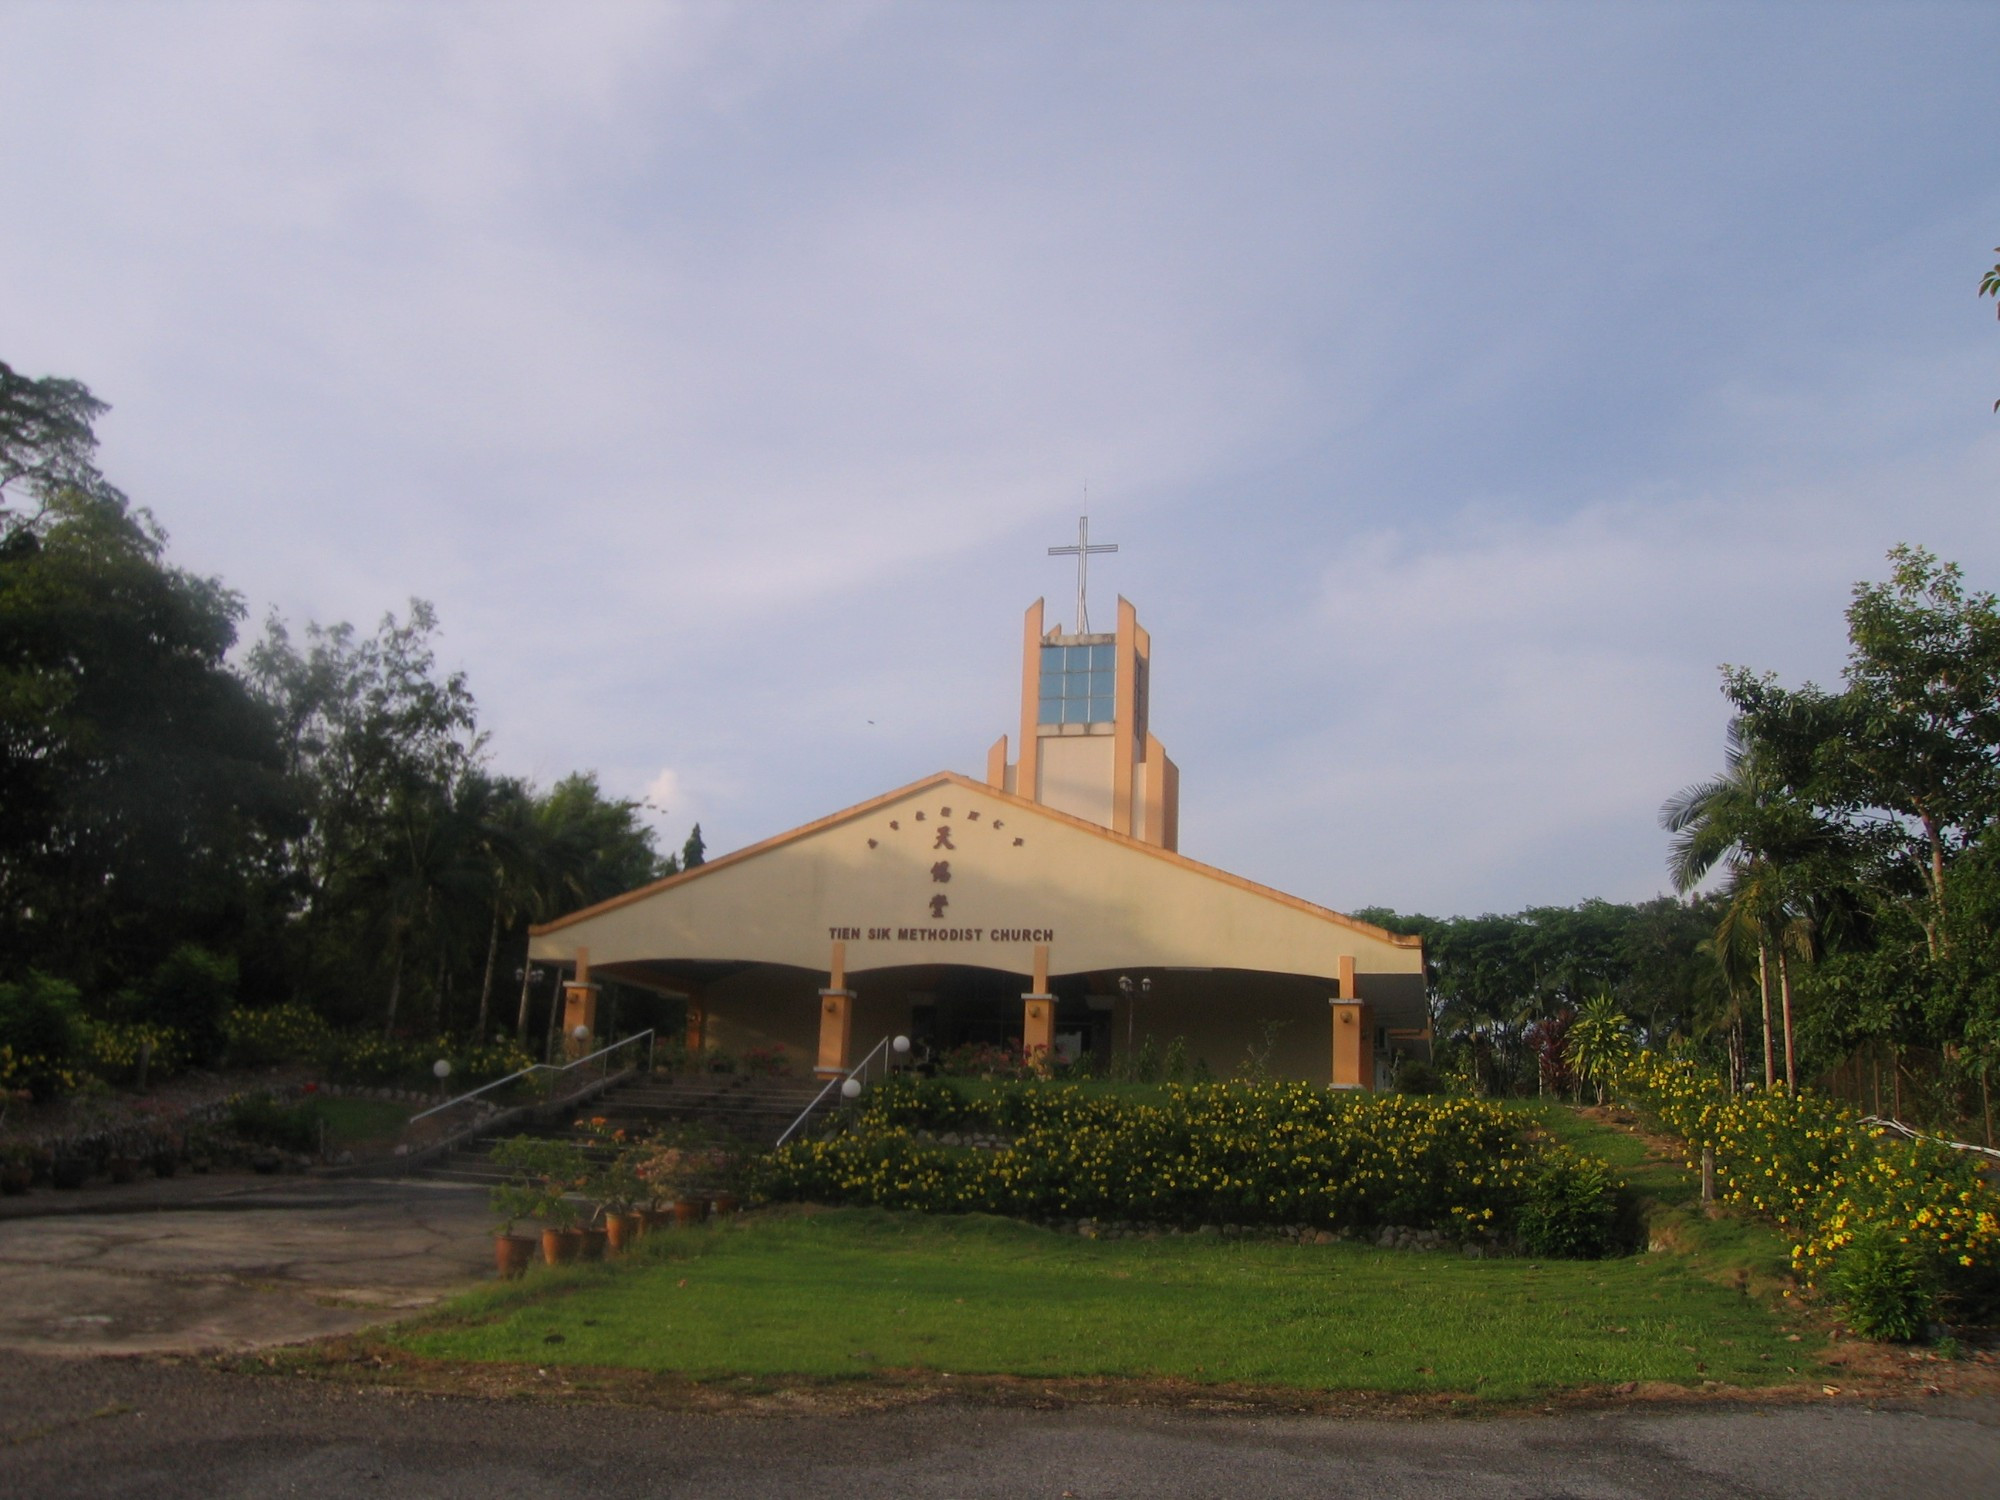 Tien Sik Methodist Church, Малайзия